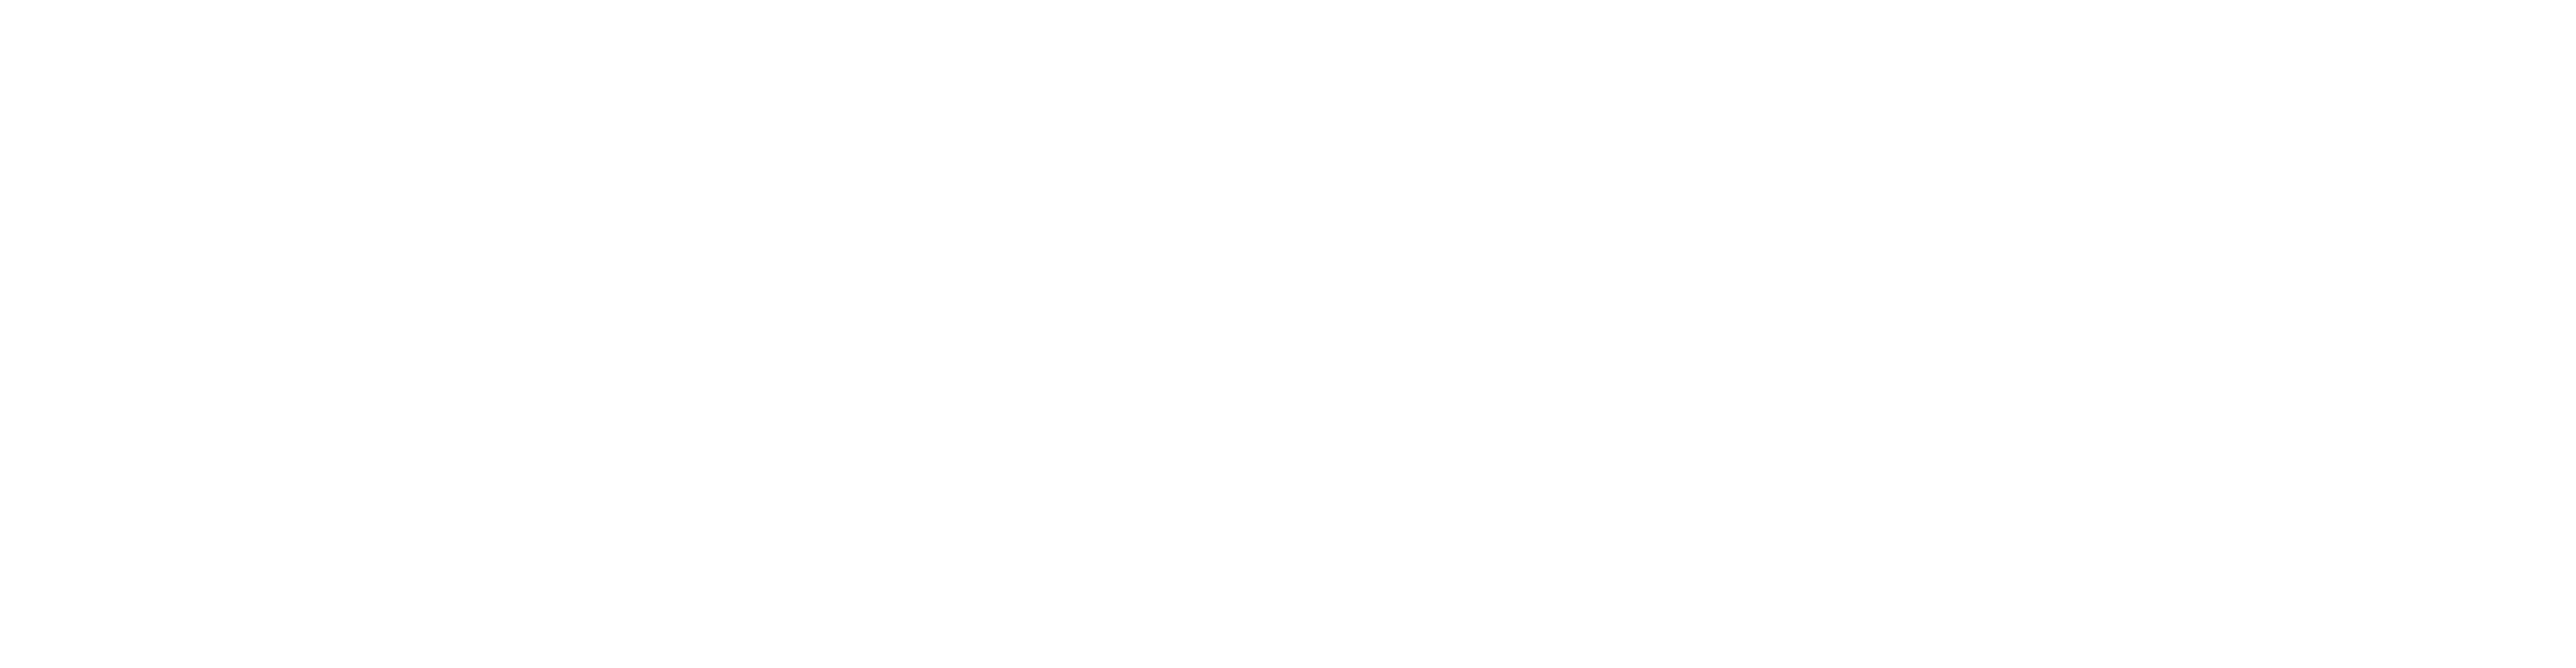 Worksible Logo